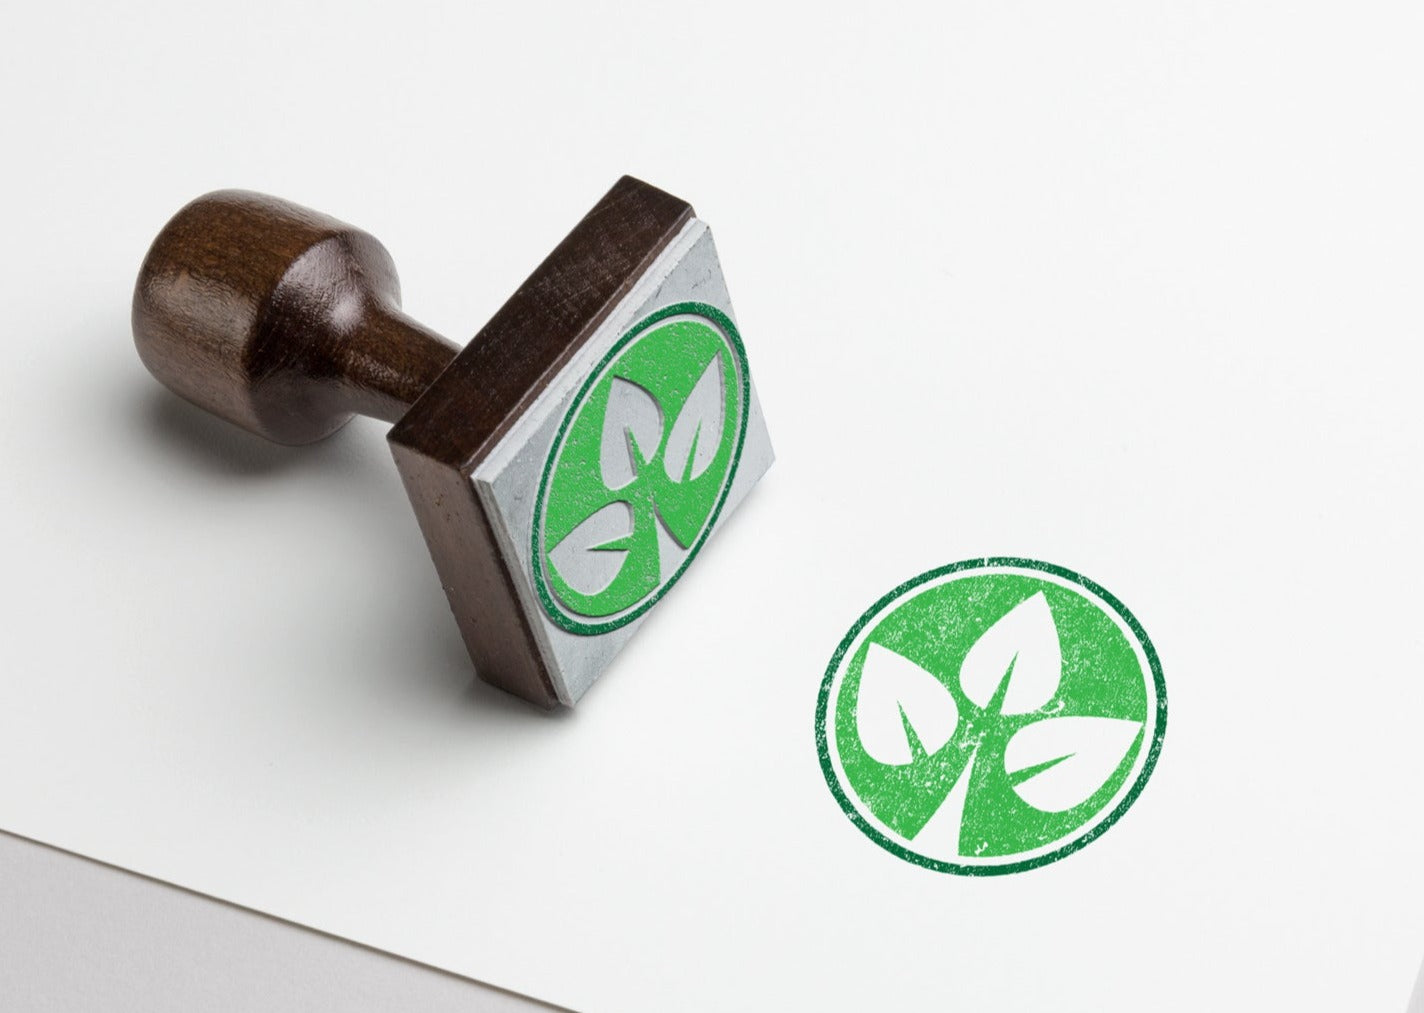 Lawn Care Logo Design | Landscaping | Leaf Logo | Lawn Design | Landscape | Lawn Maintenance | Business | Company